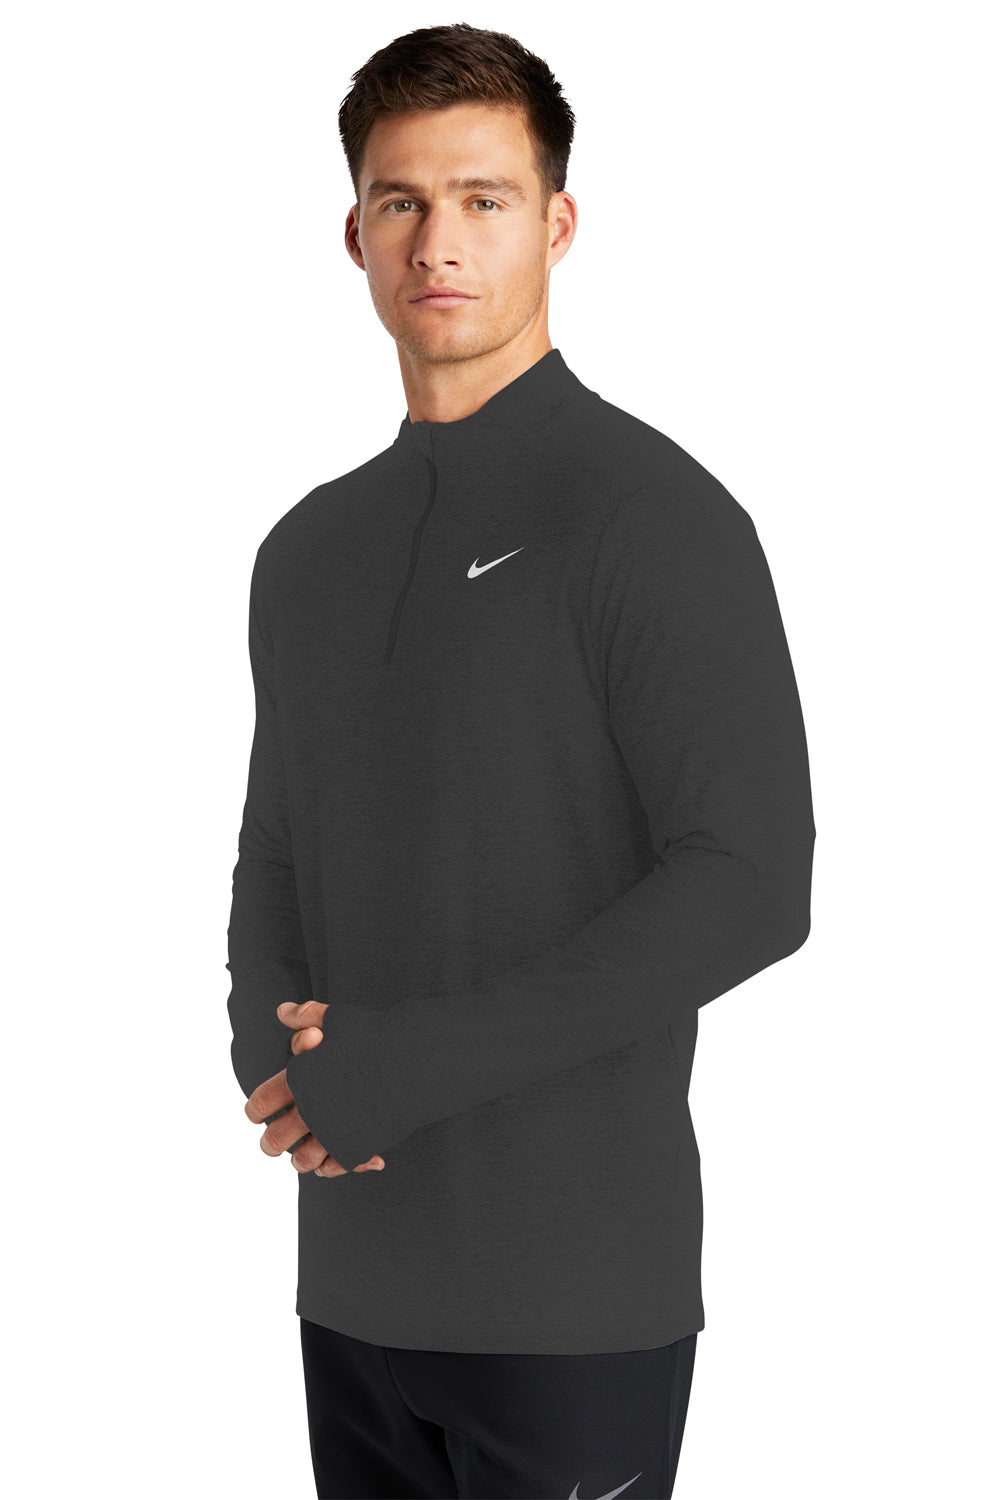 Nike NKDH4949 Mens Element Dri-Fit Moisture Wicking 1/4 Zip Sweatshirt Anthracite Grey Model 3Q